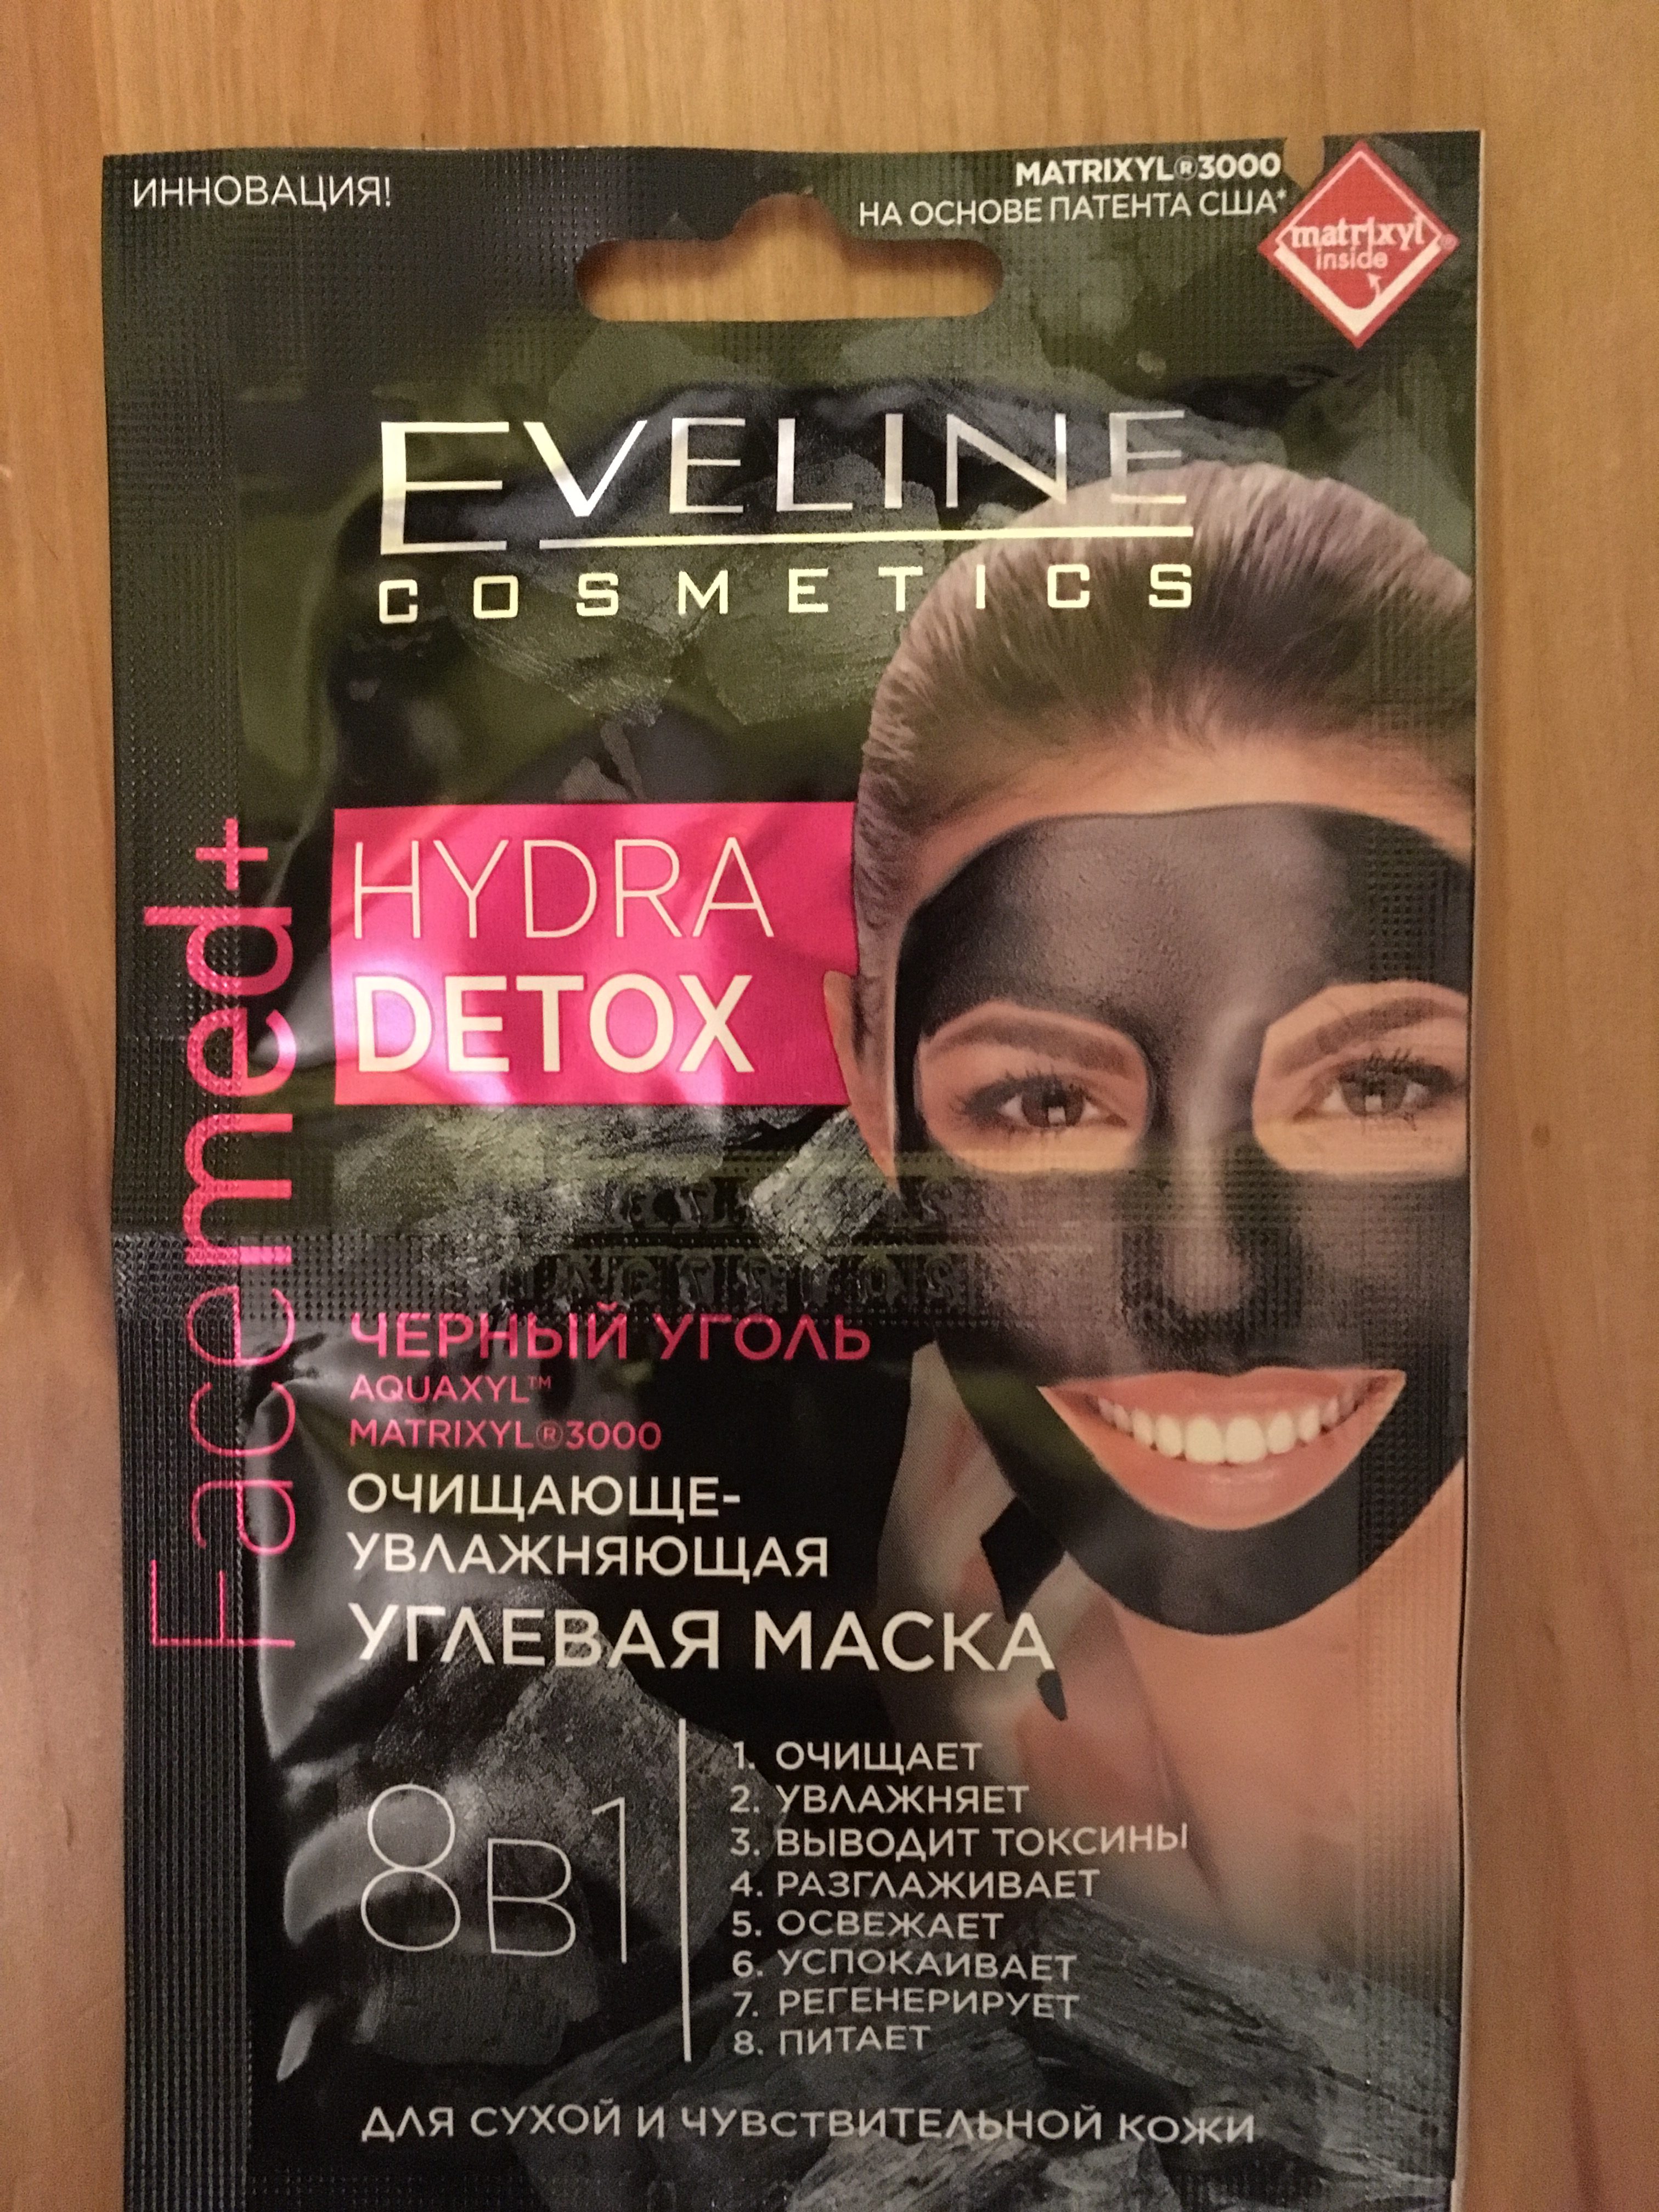 Маска для лица EVELINE Cosmetics XYDRA DETOX. Отзыв